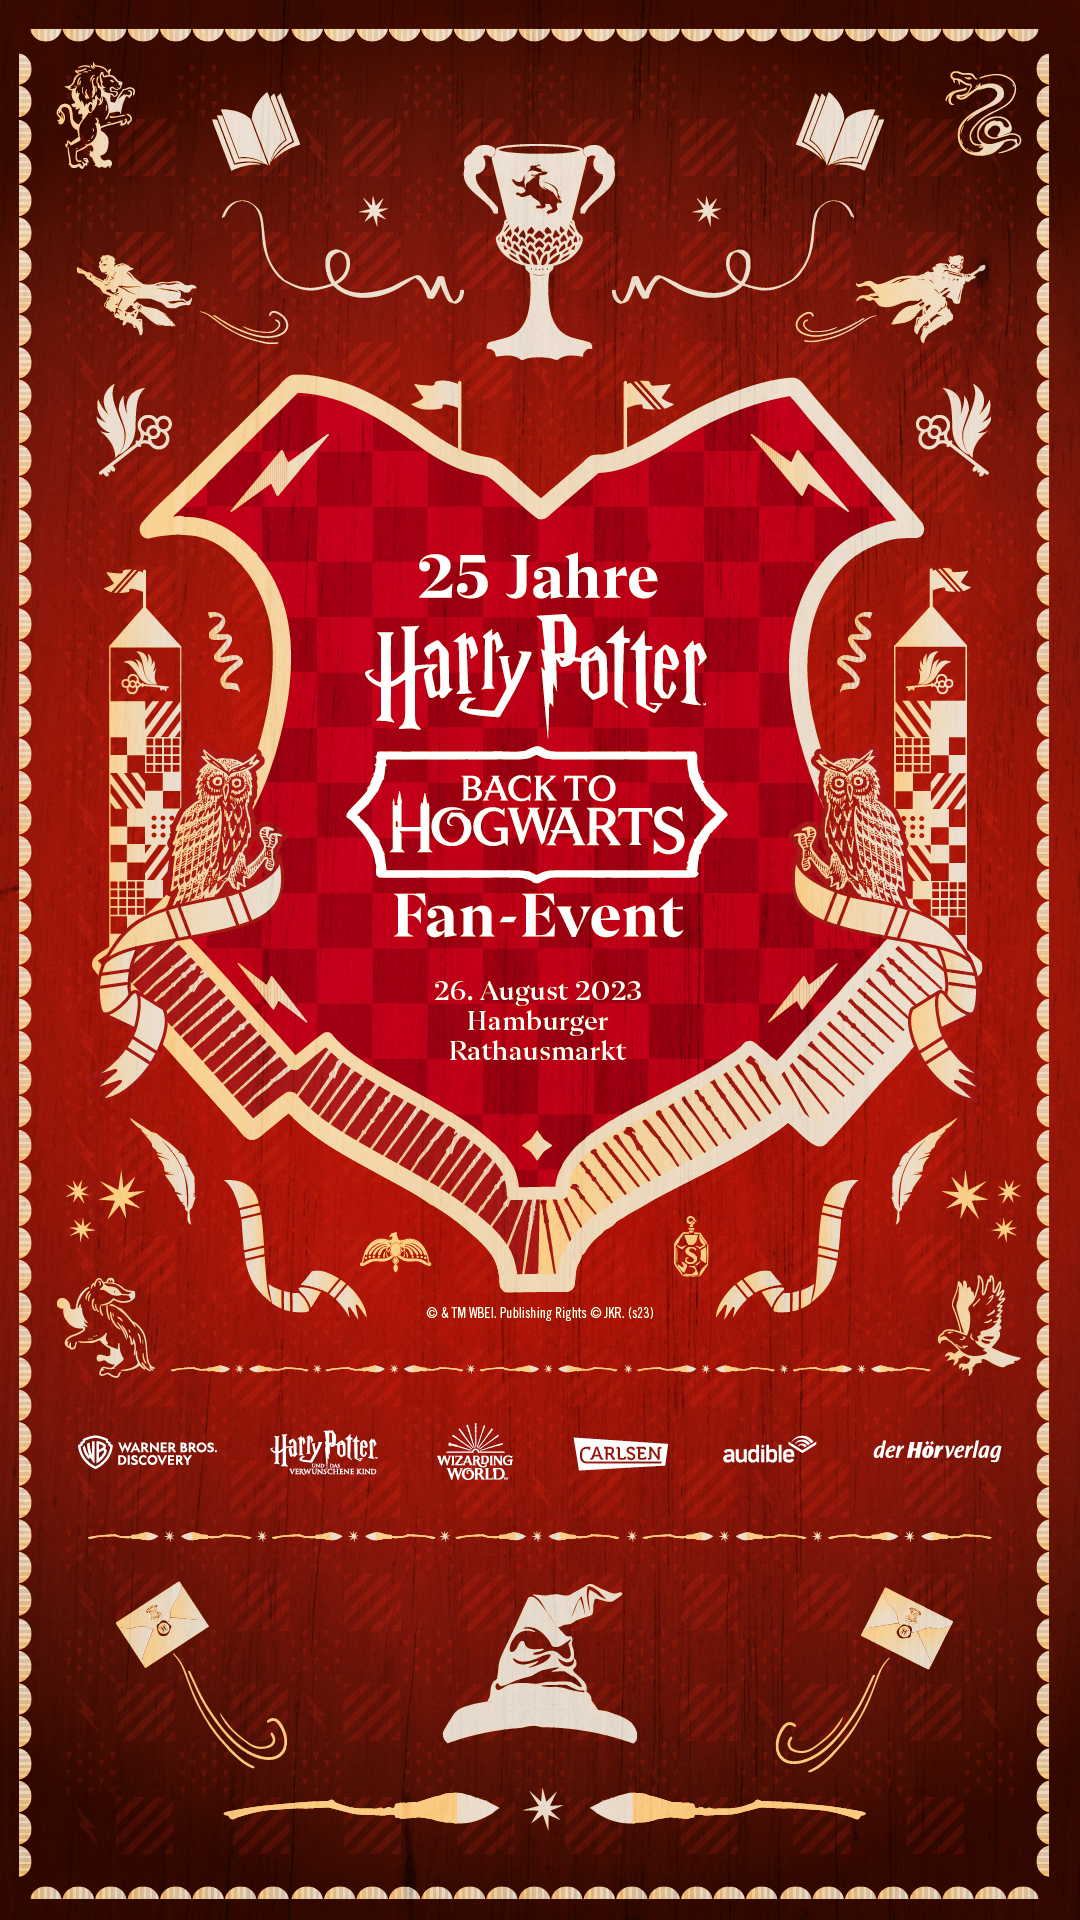 25 Jahre Harry Potter Event in Hamburg